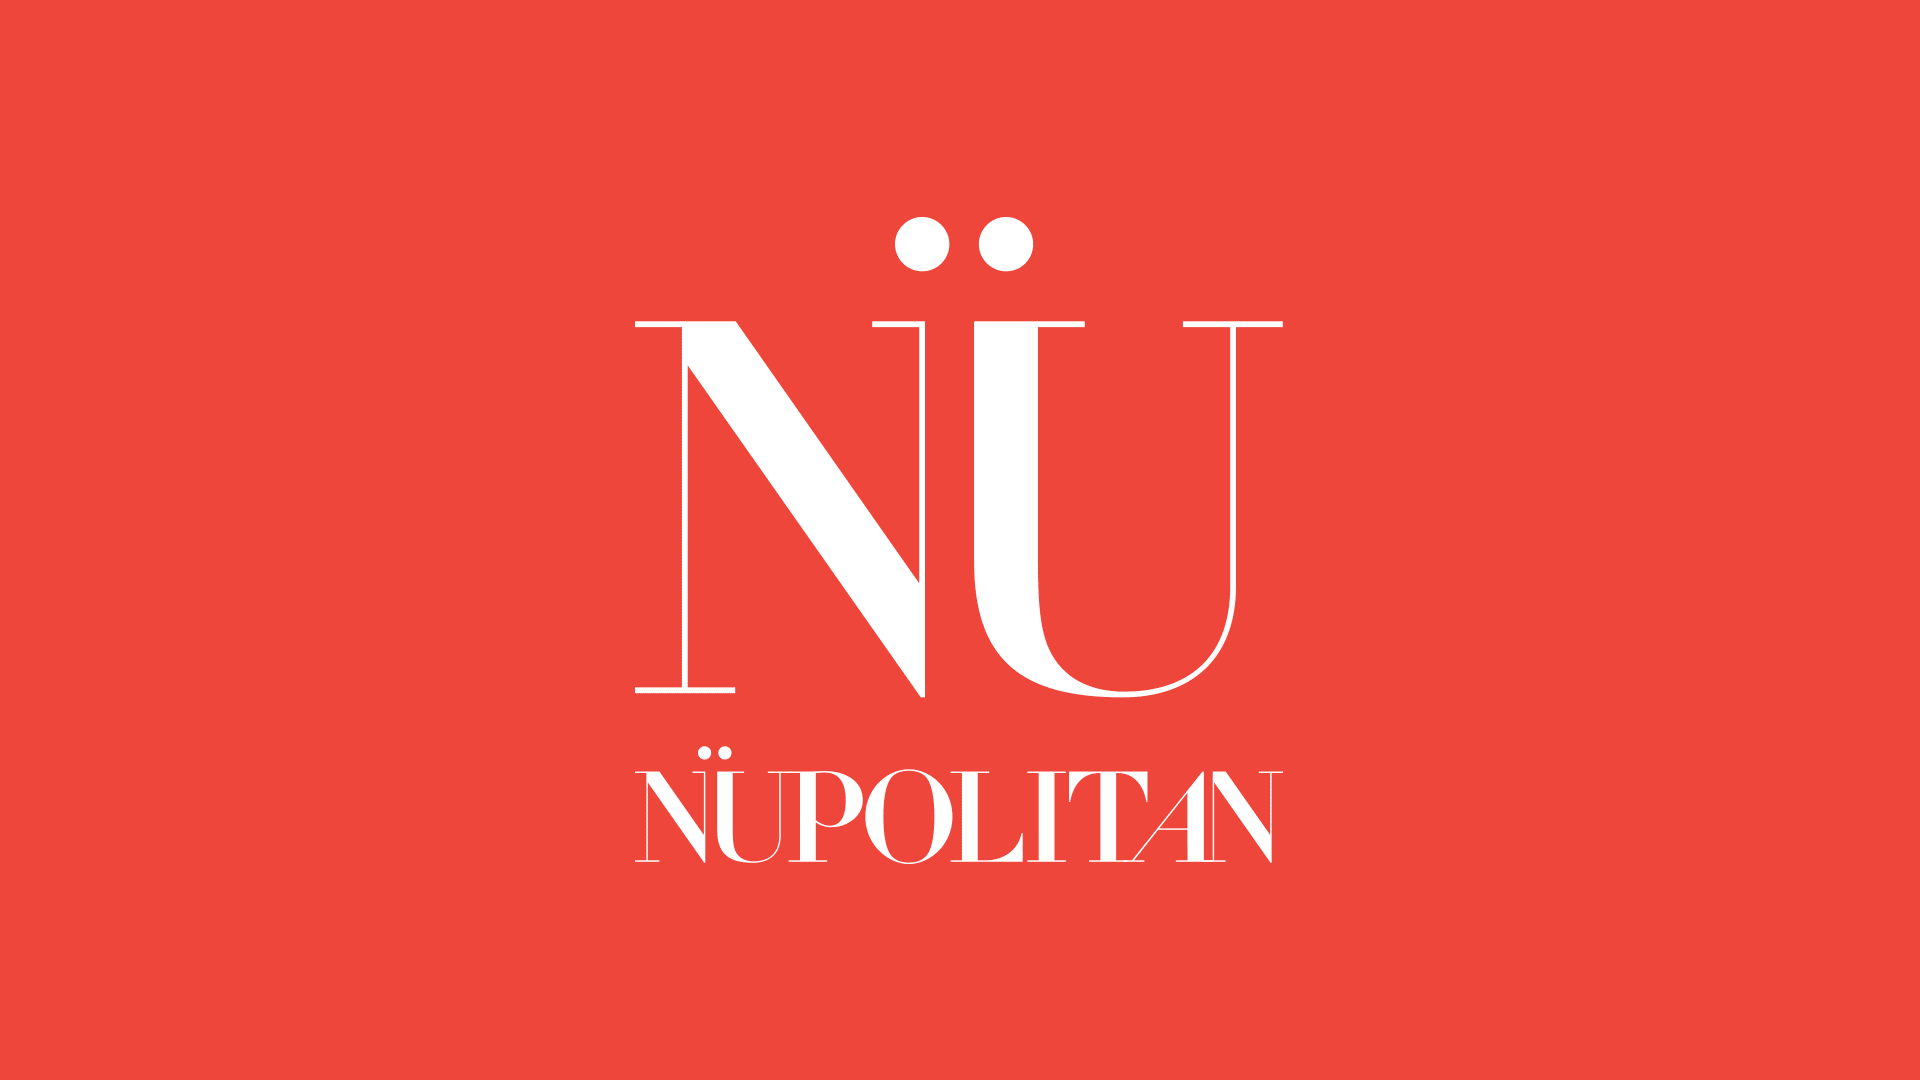 NÜ Nüpolitan in white on alternating colored backgrounds